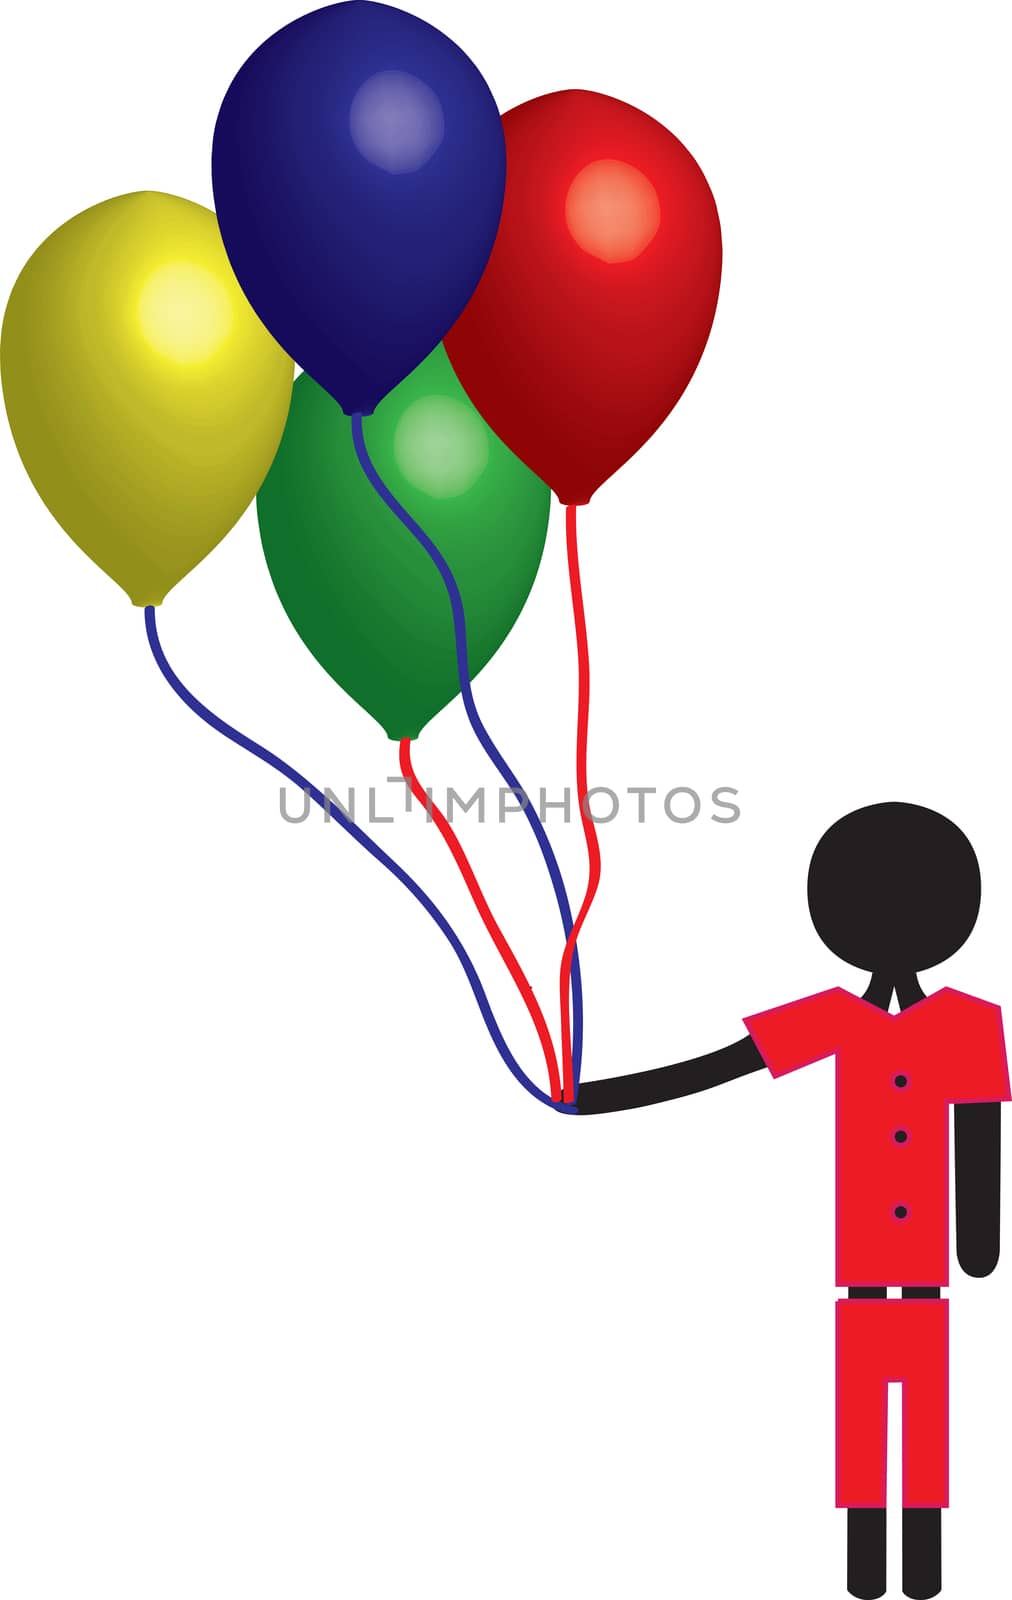 balloon boy by compuinfoto